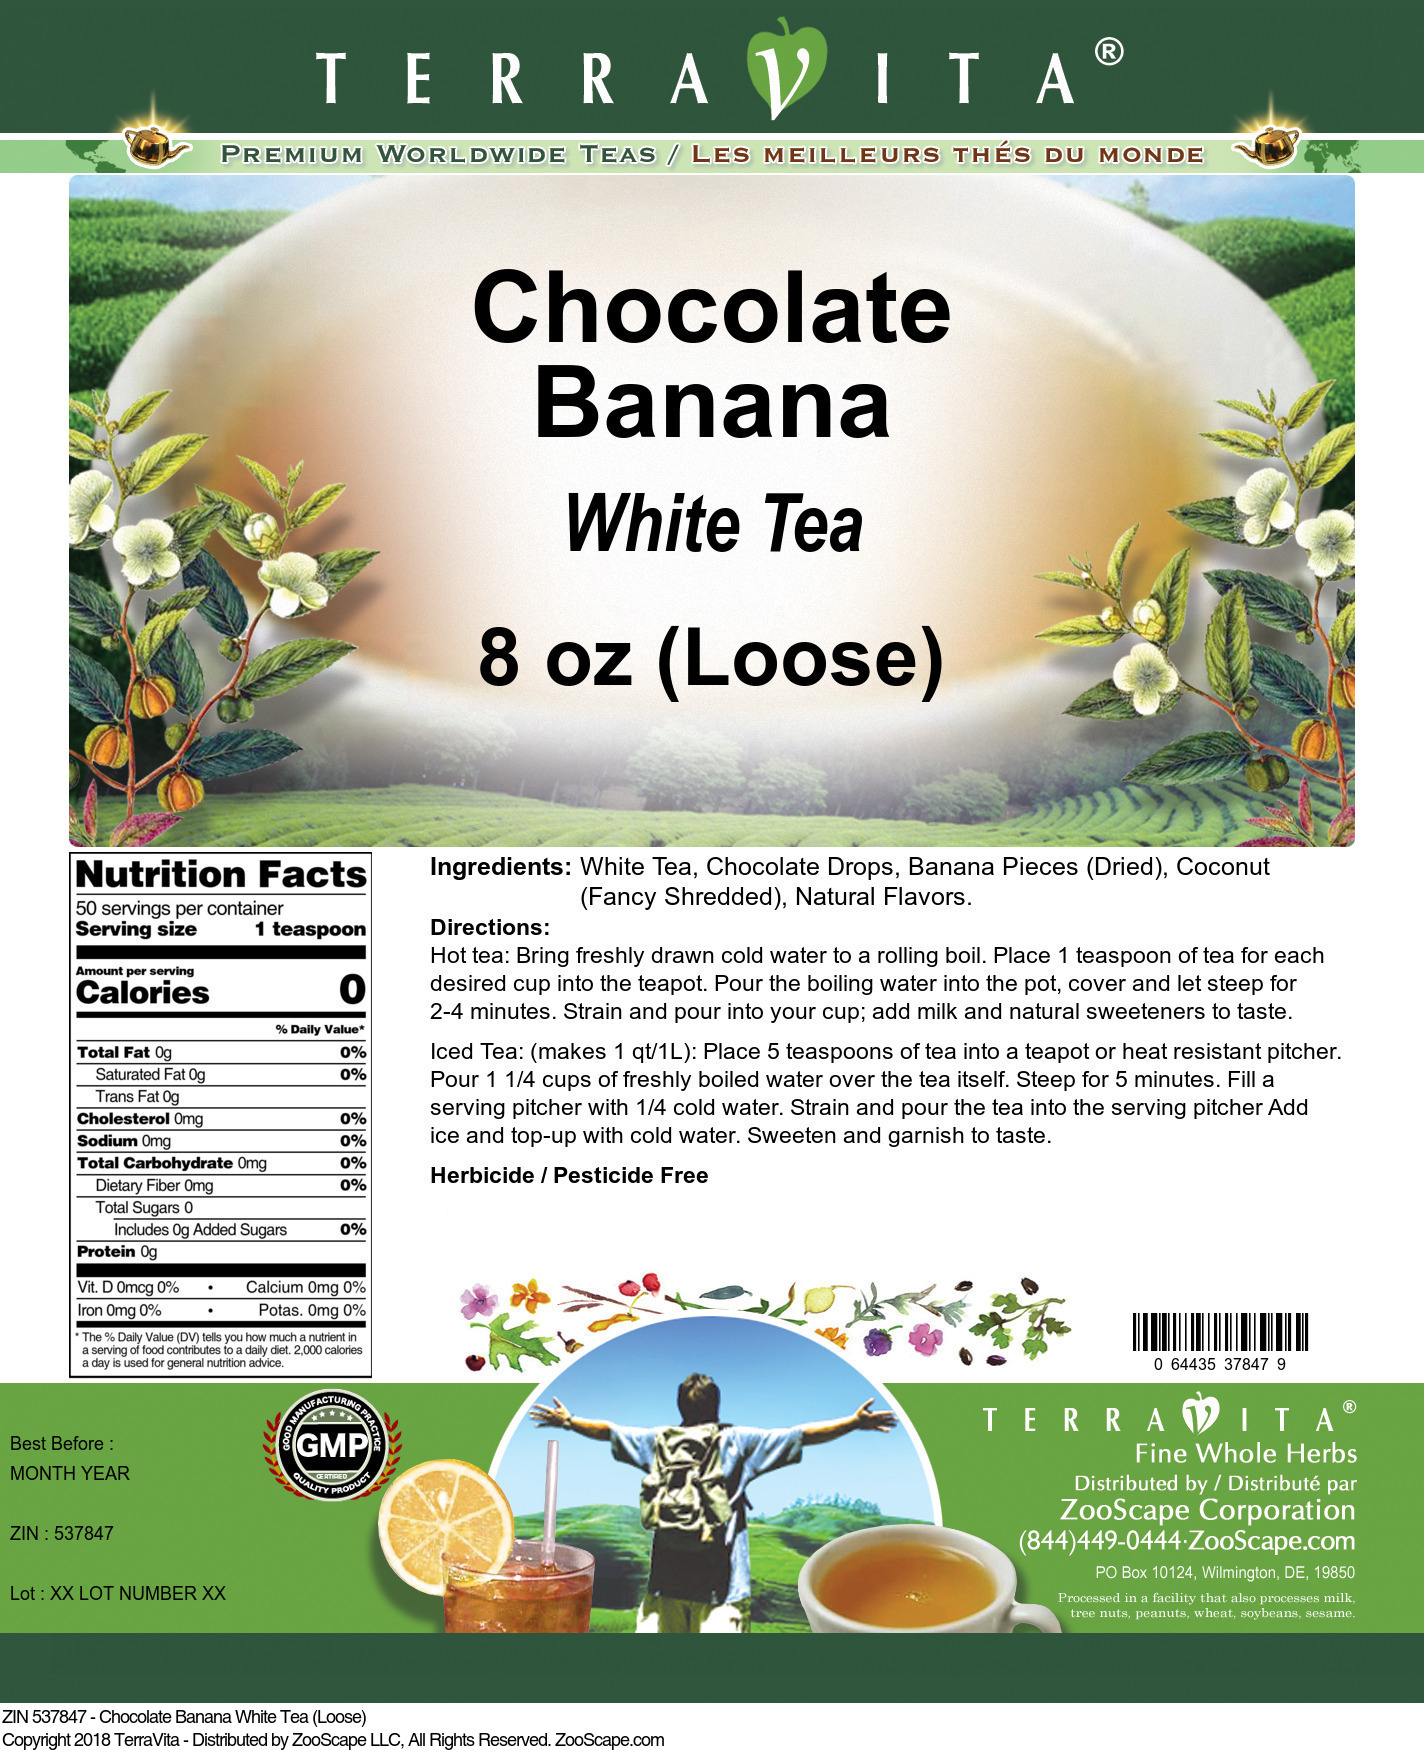 Chocolate Banana White Tea (Loose) - Label